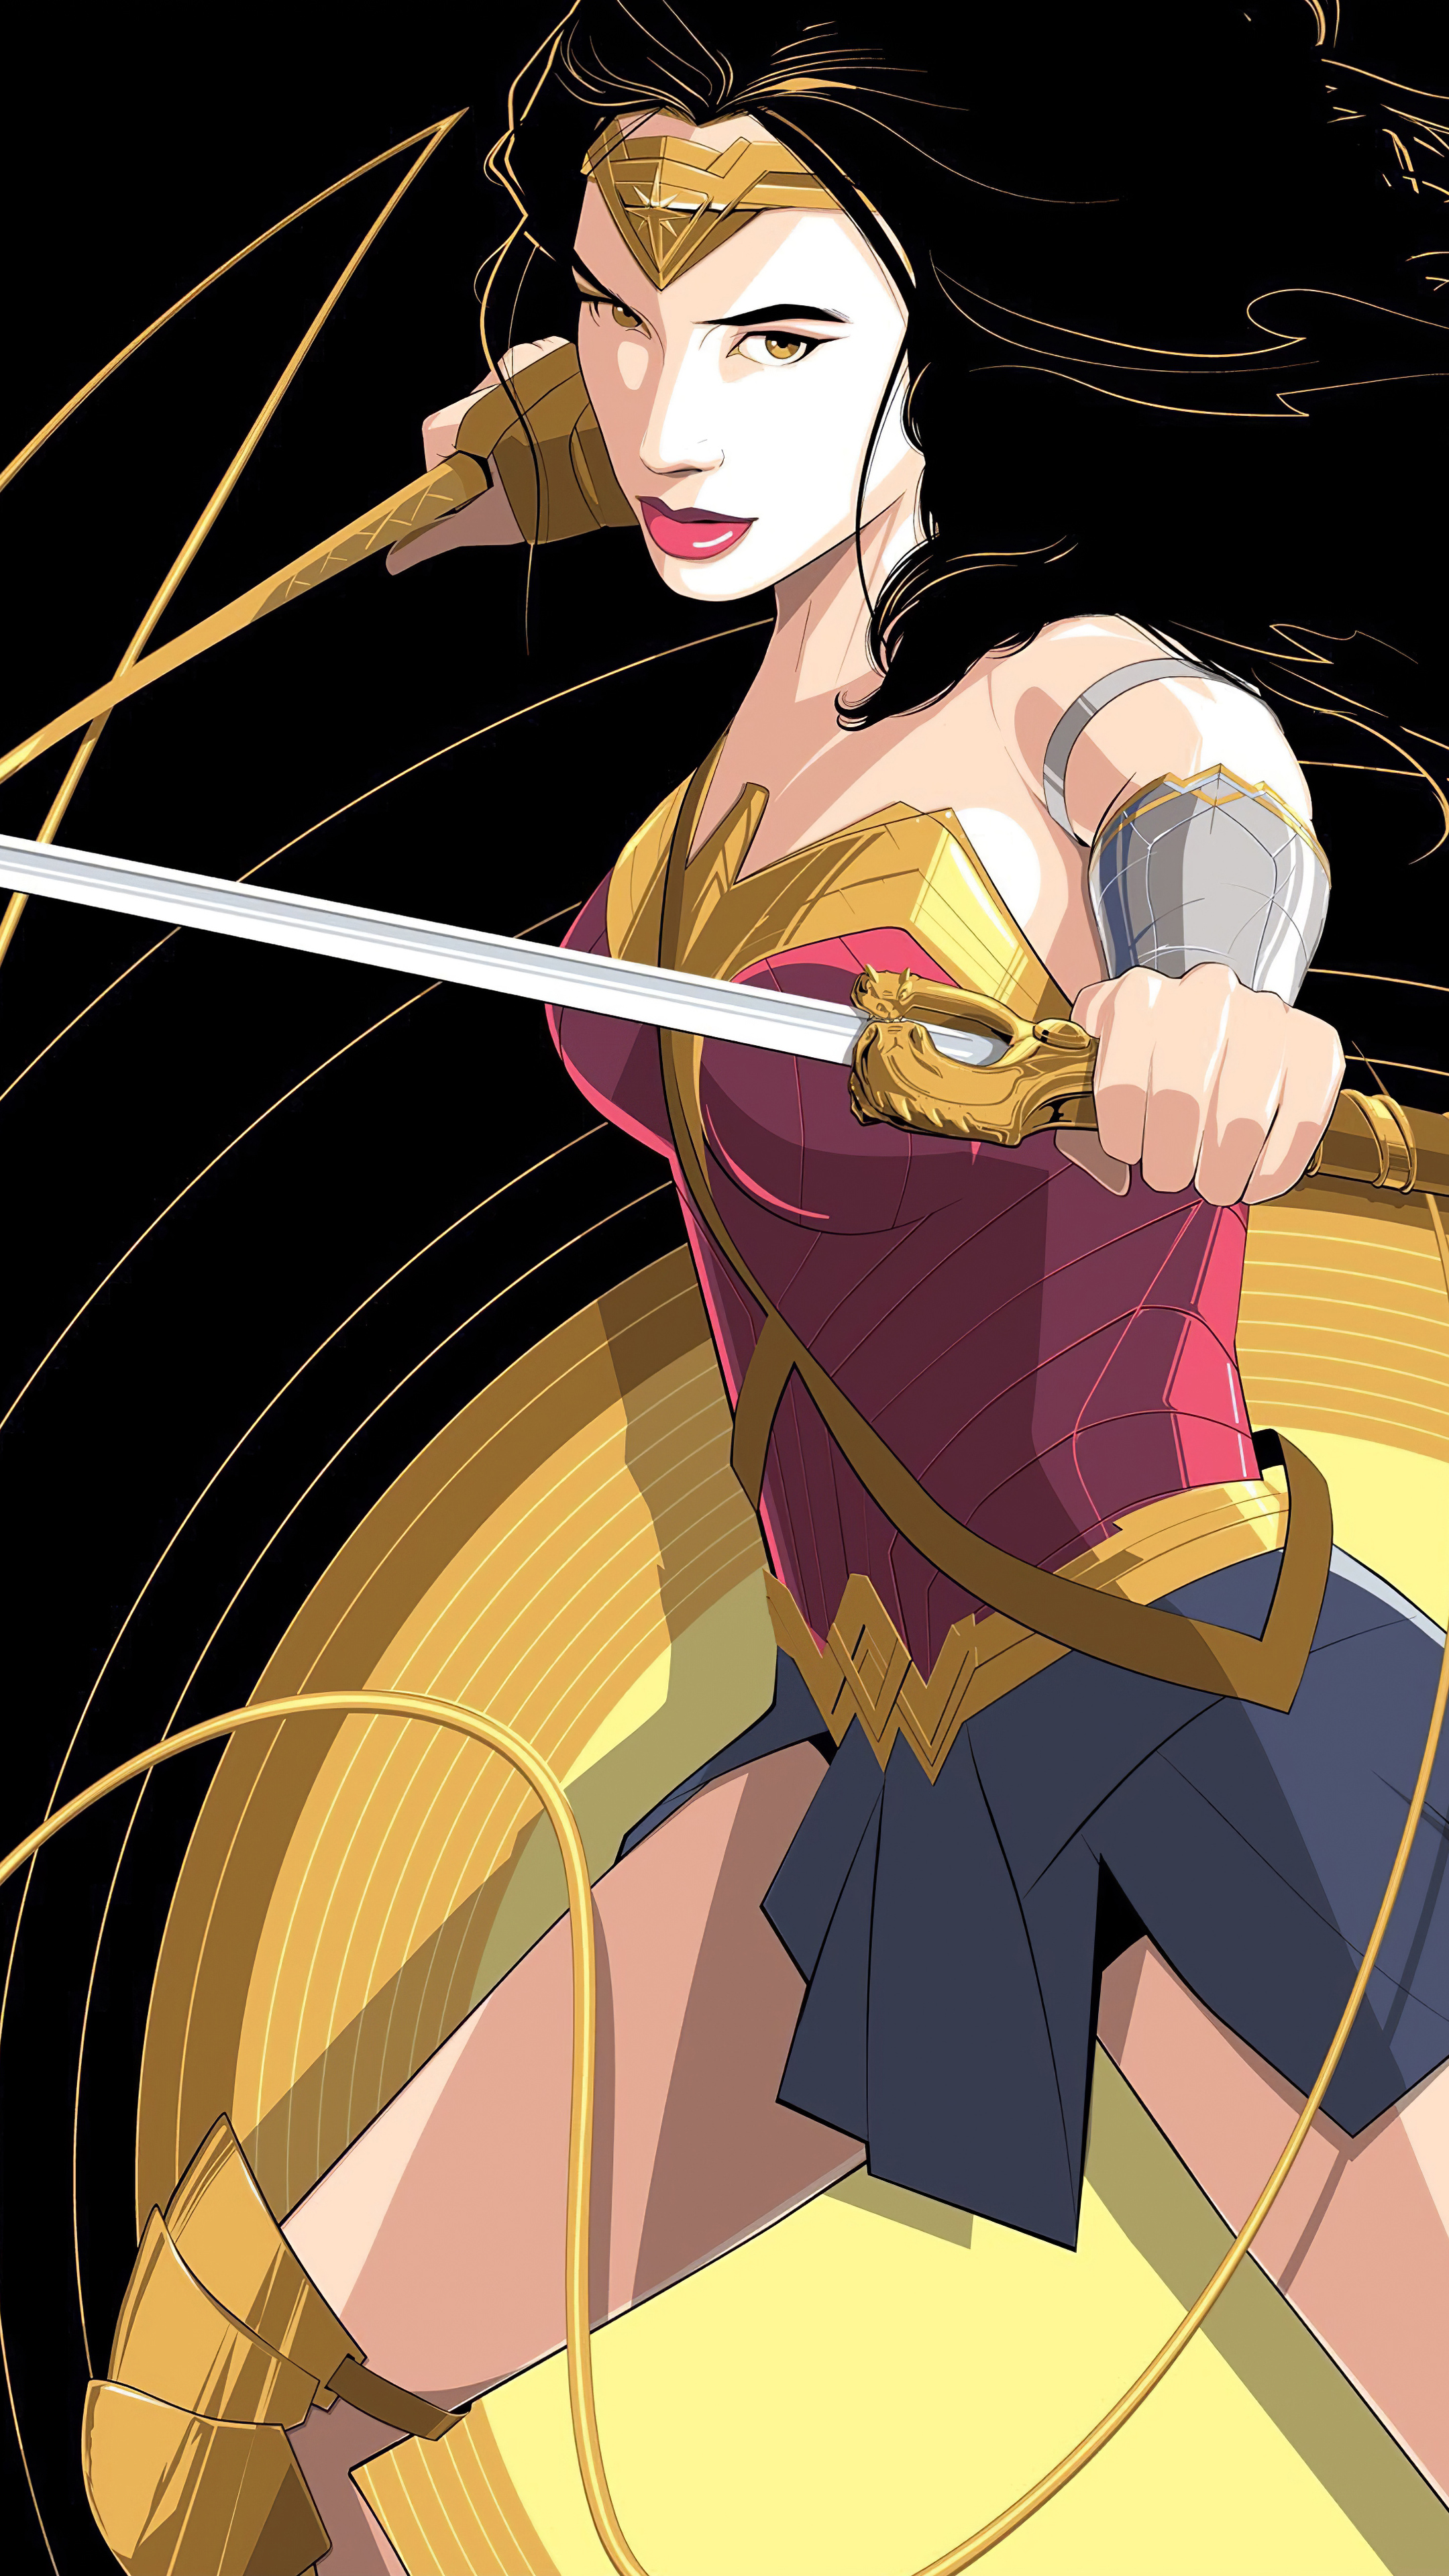 General 2160x3840 Craig Drake Wonder Woman dual wield sword DC Comics DC Universe